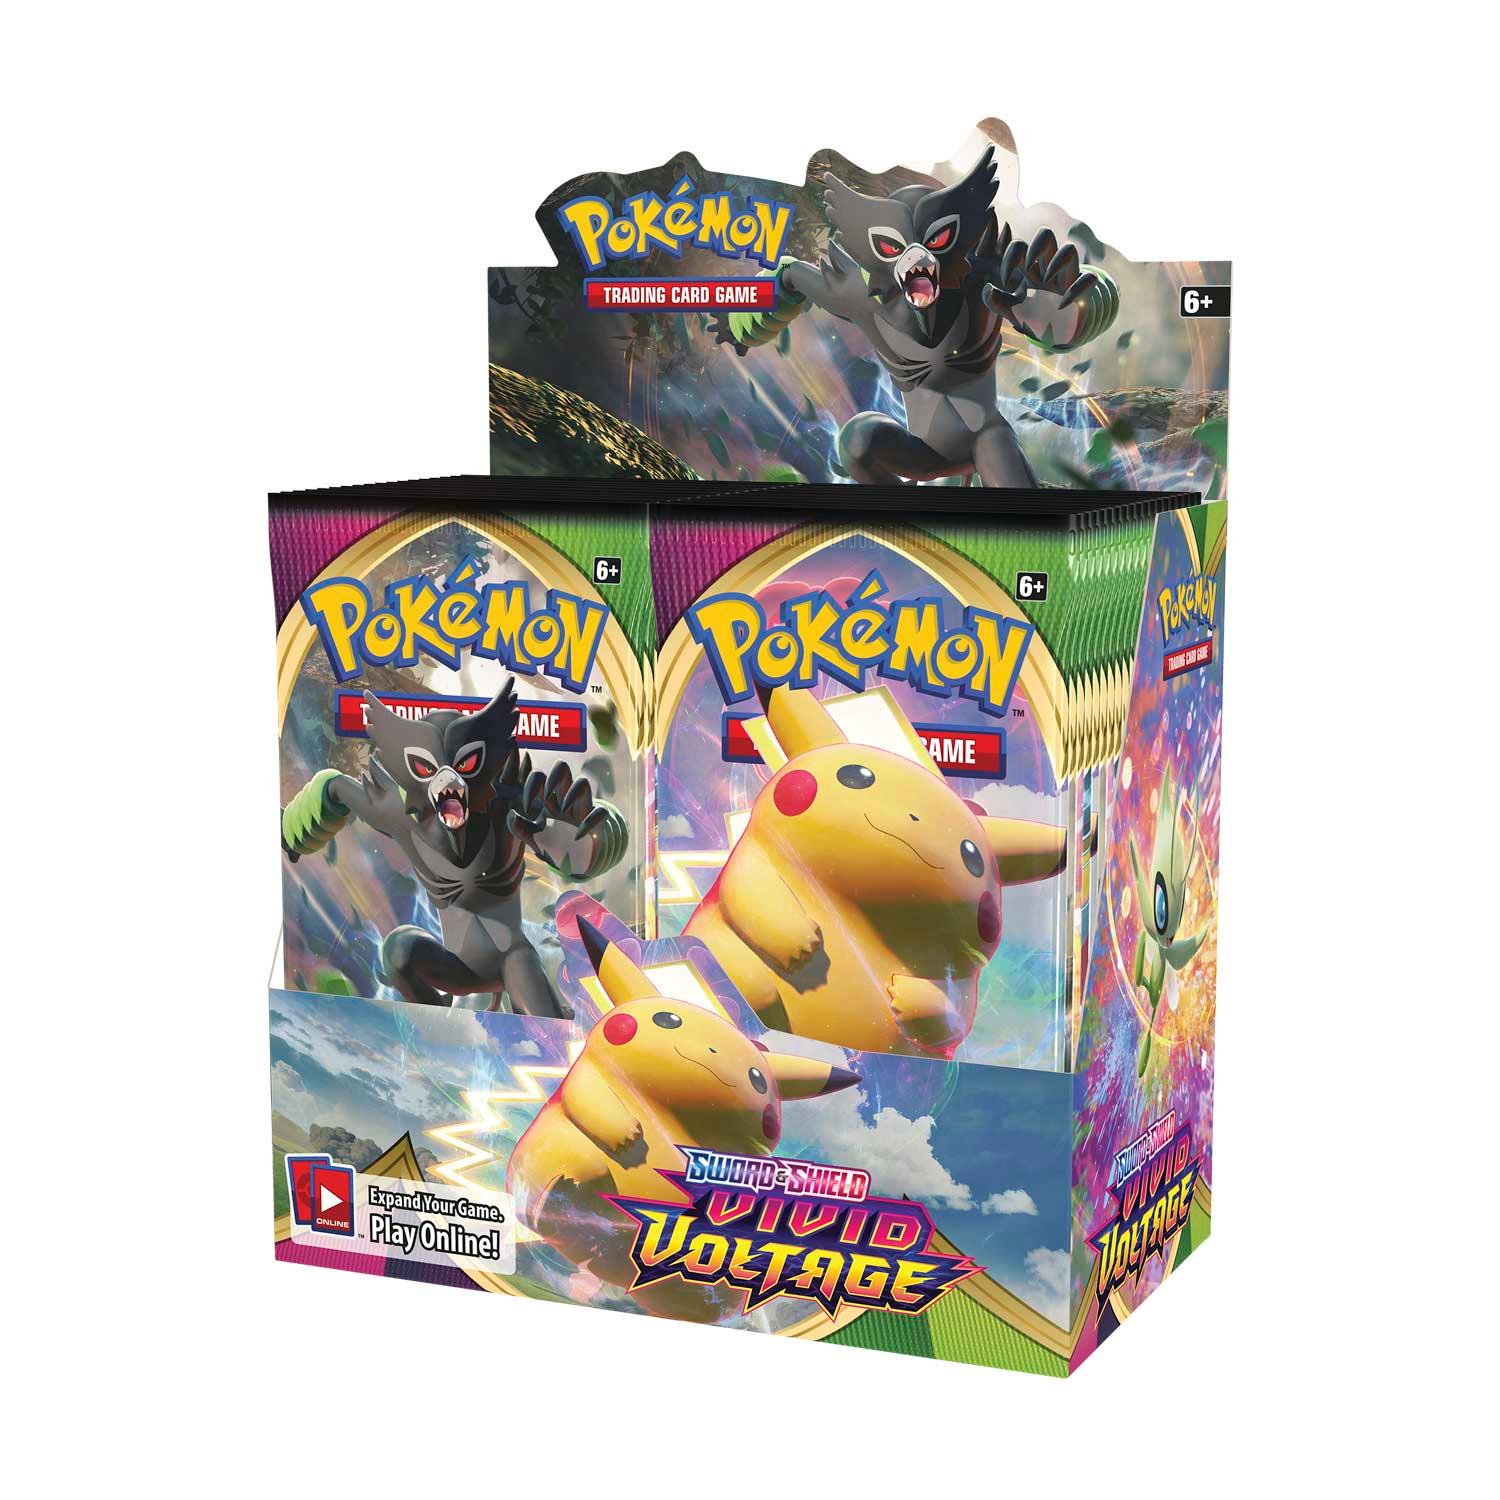 Pokemon Booster Box (36 Packs) - Sword & Shield - Vivid Voltage - Hobby Champion Inc